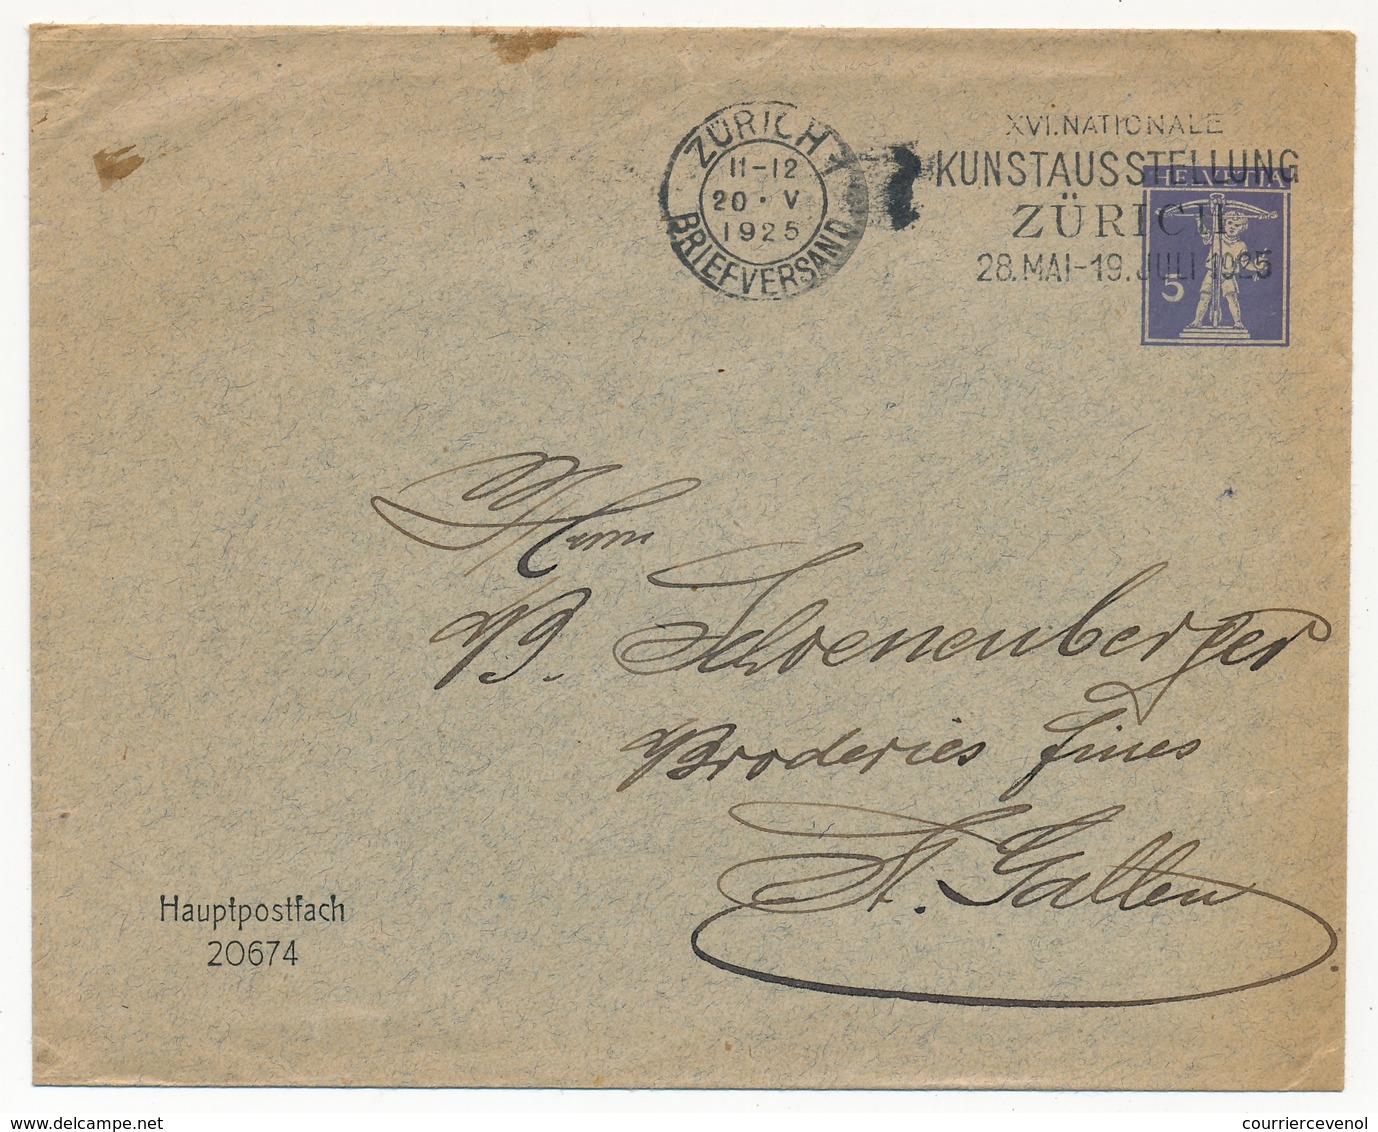 SUISSE - Entier Postal Enveloppe 5c - Mention Imprimée "Hauptpostfach 20674" - Zürich 1925 - Ganzsachen